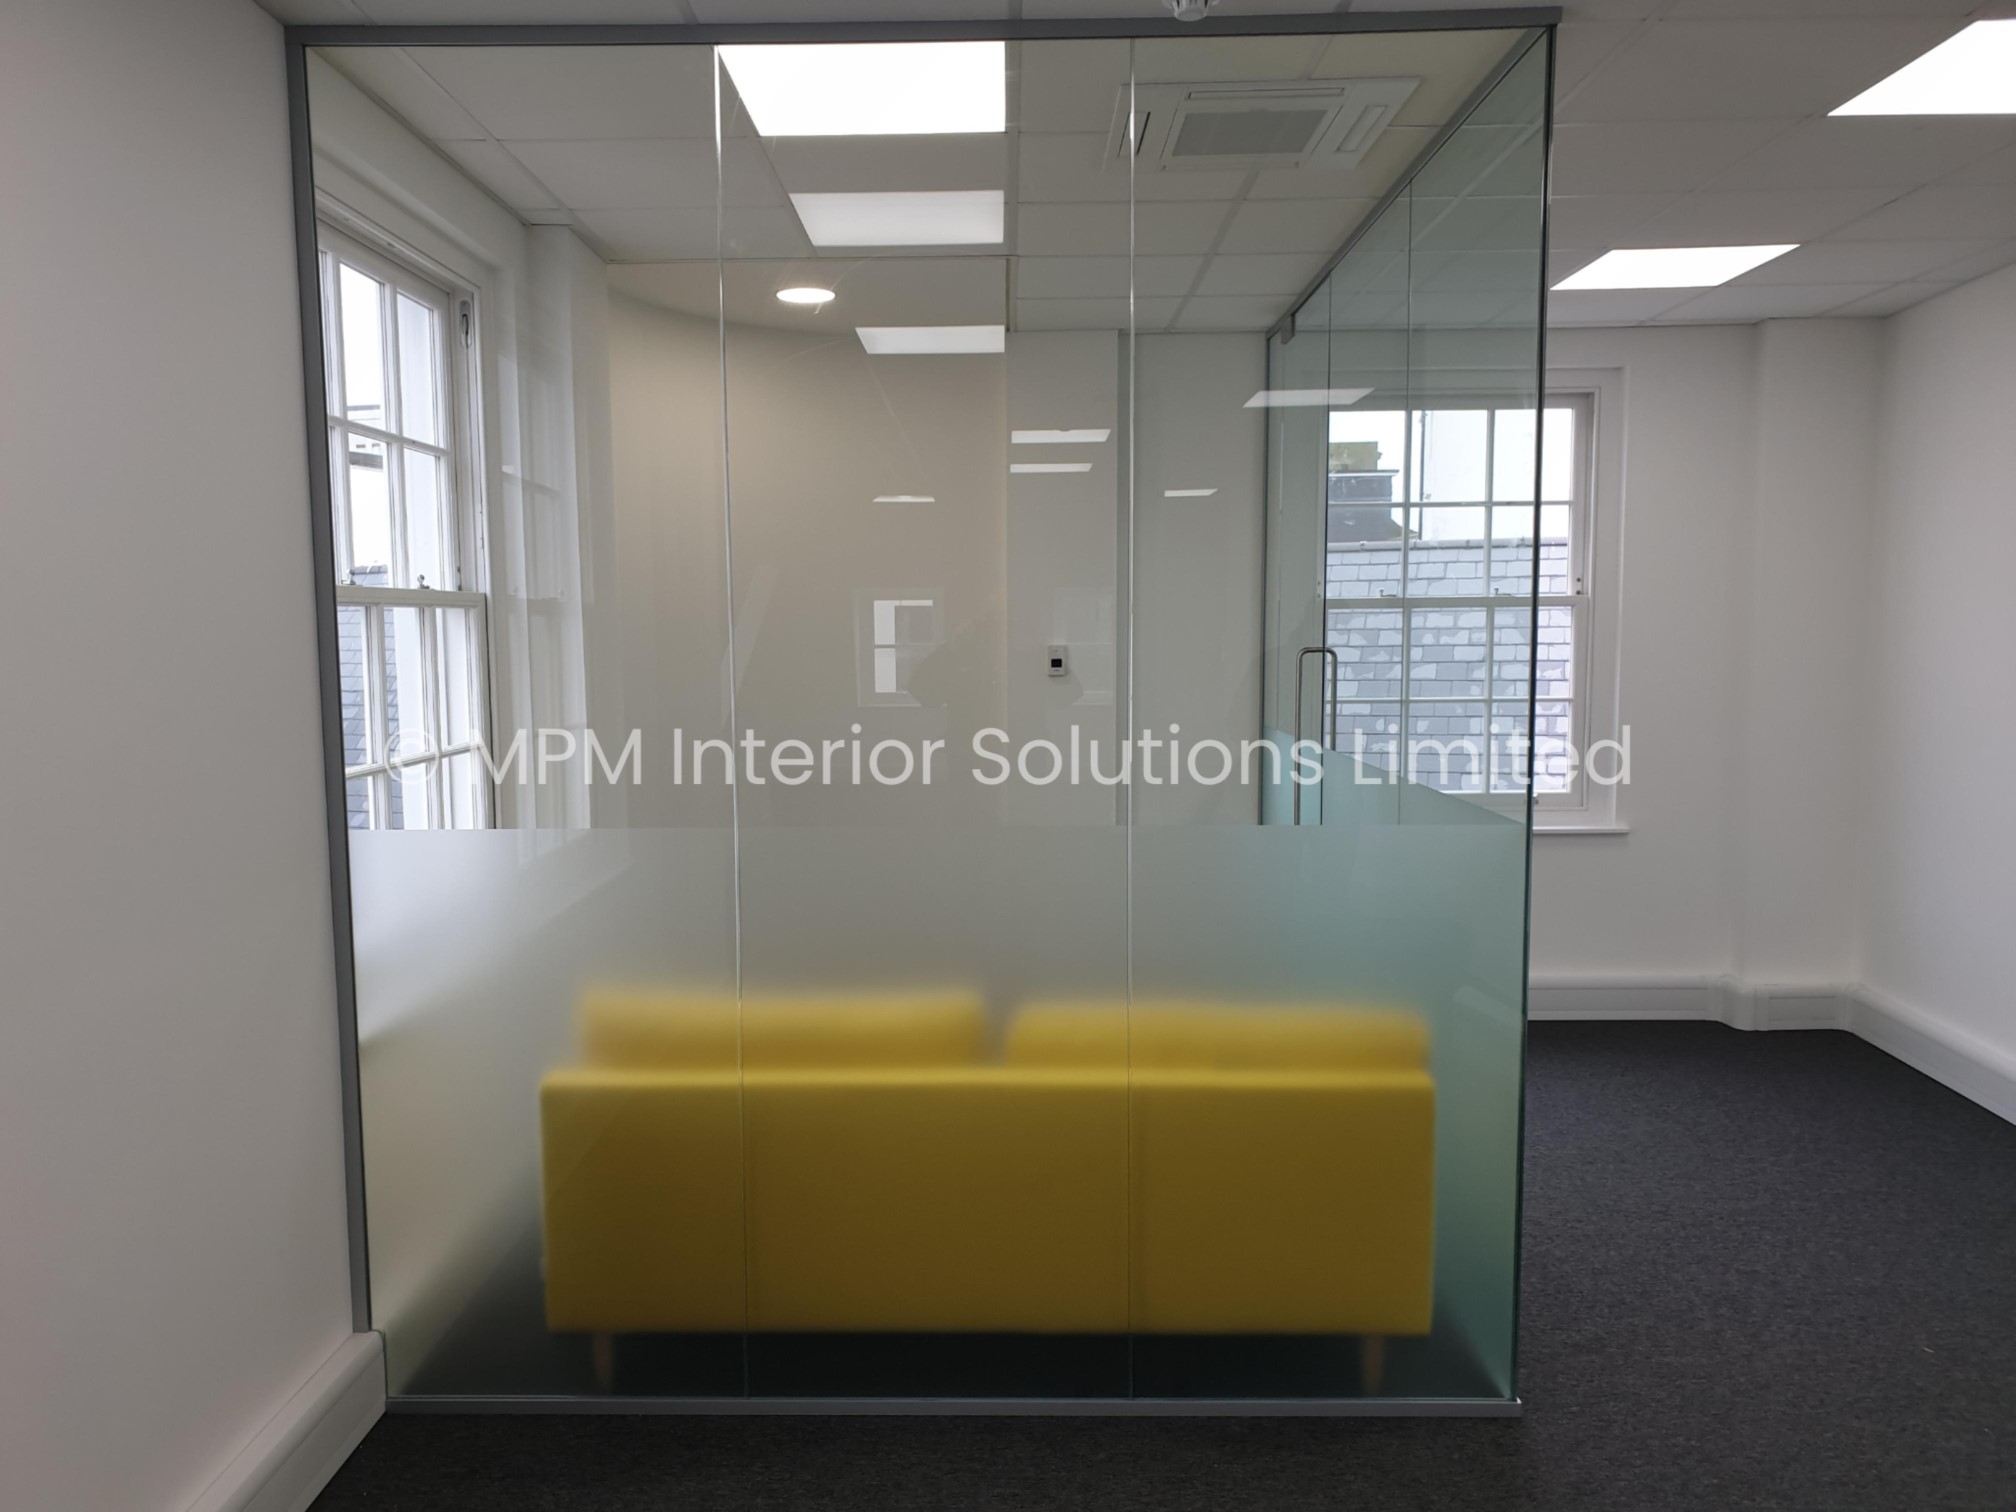 Frameless Glass Office Partitioning, Blast! Films Ltd (Brighton, East Sussex), MPM Interior Solutions Limited